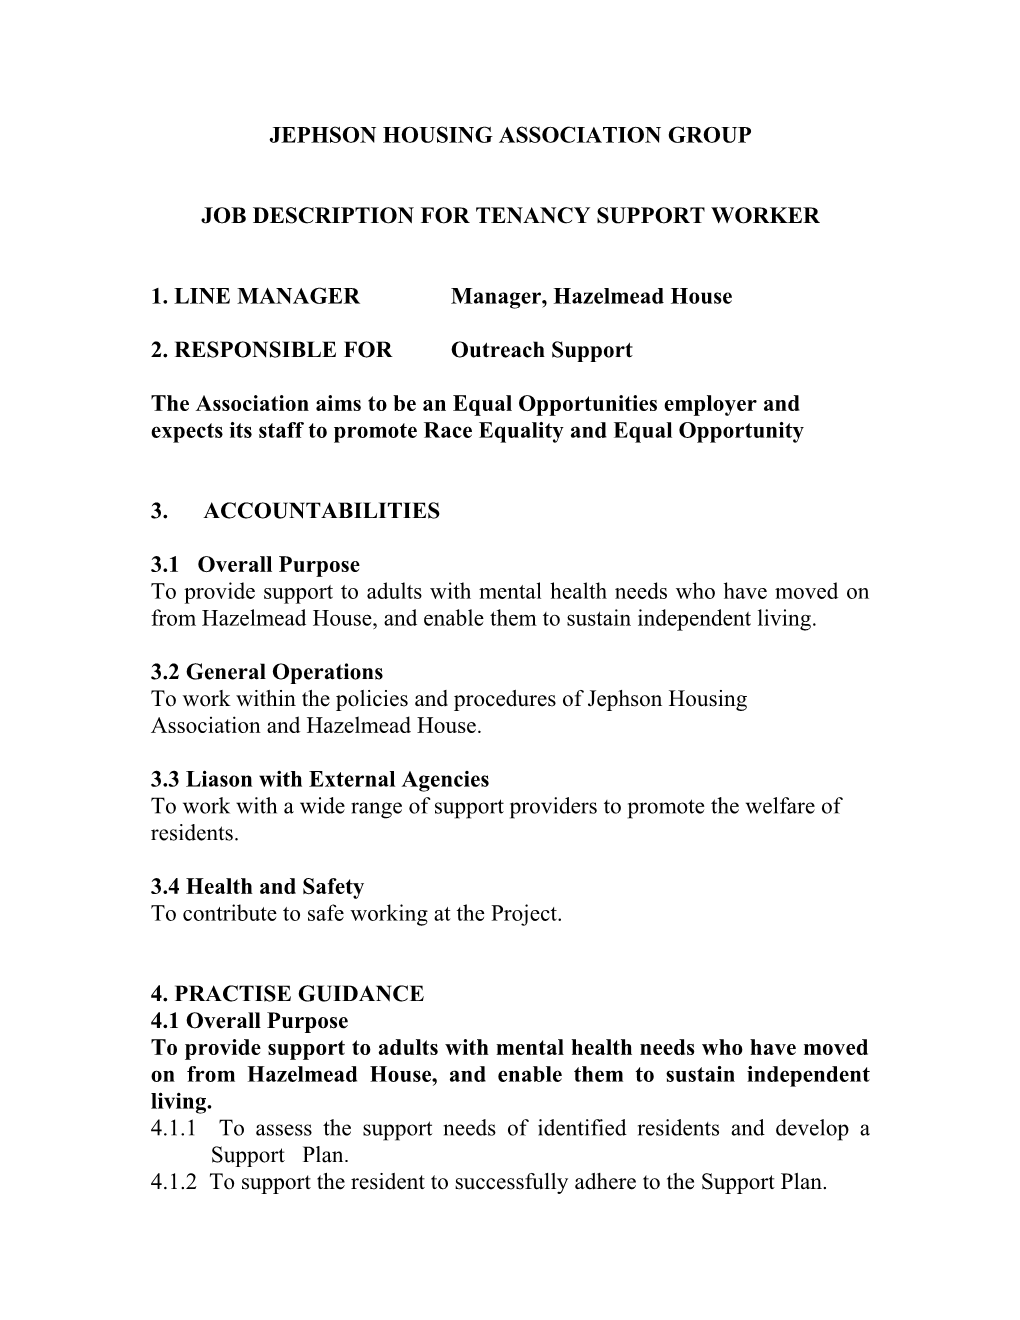 Job Description for Tenancy Support Worker